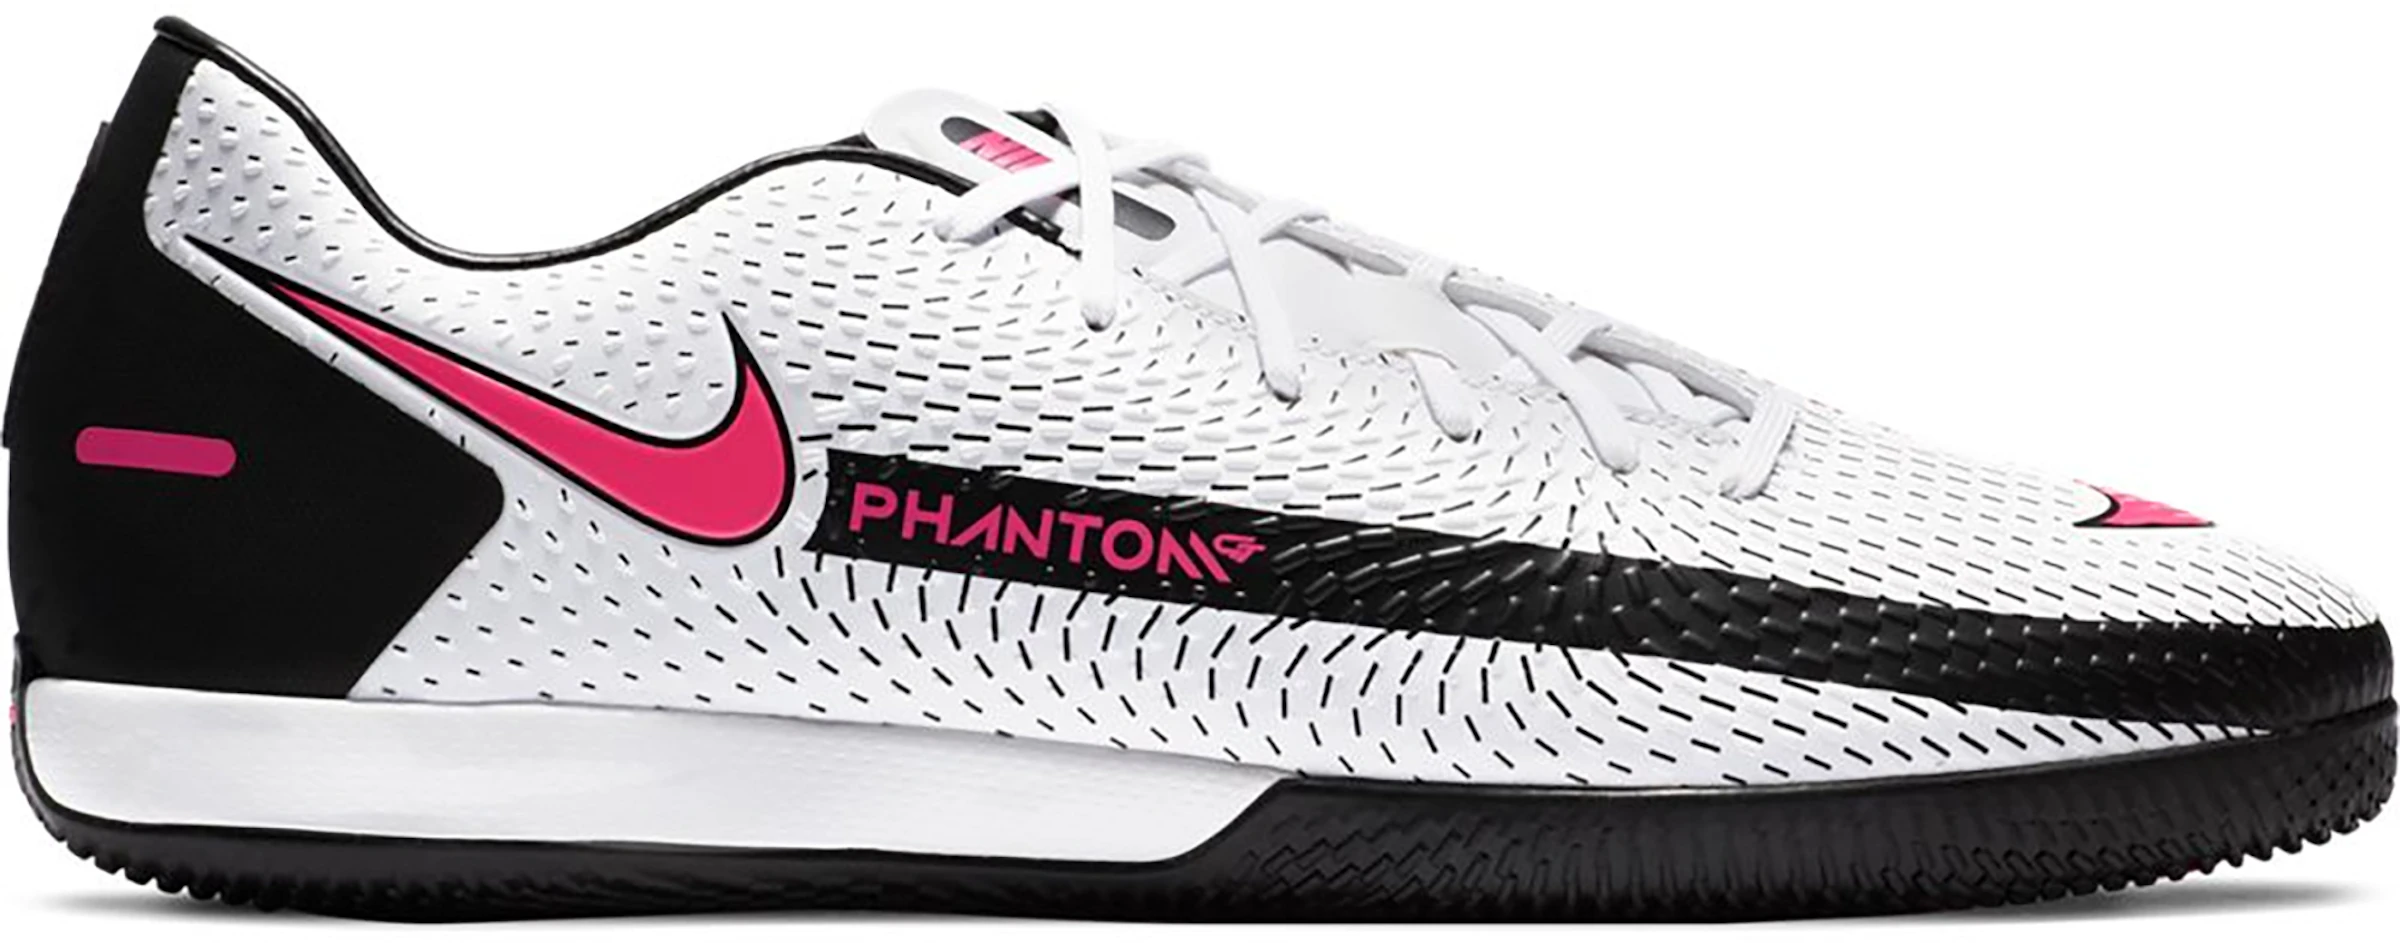 Nike Phantom GT Academy IC White Black Pink Blast - CK8467-160 - US